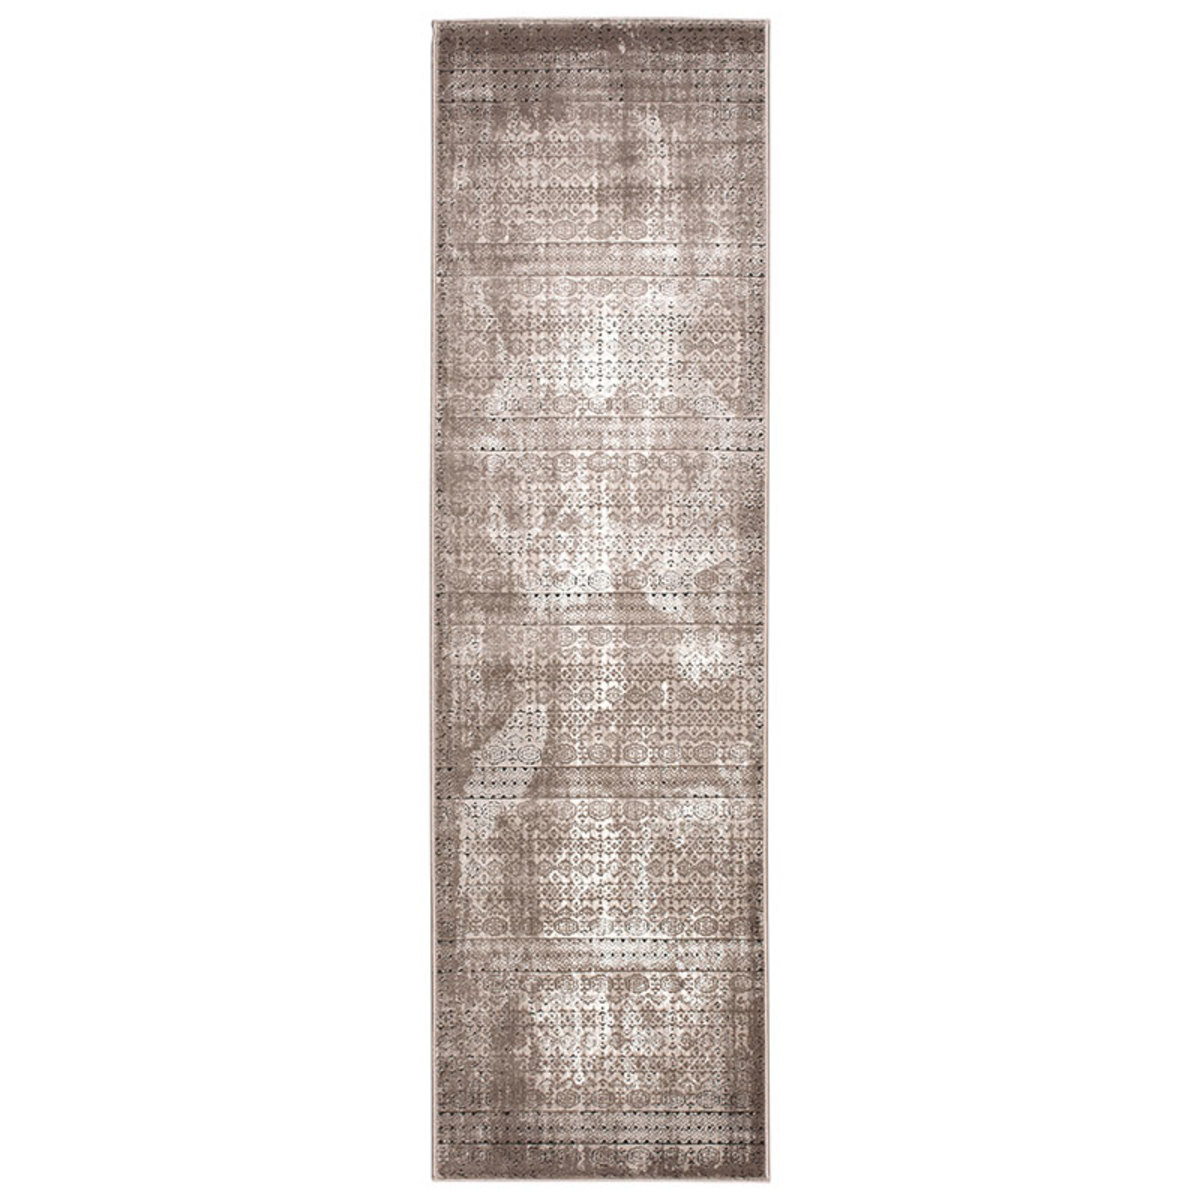 Marrakech Style Rug in Ash, 226 x 66cm